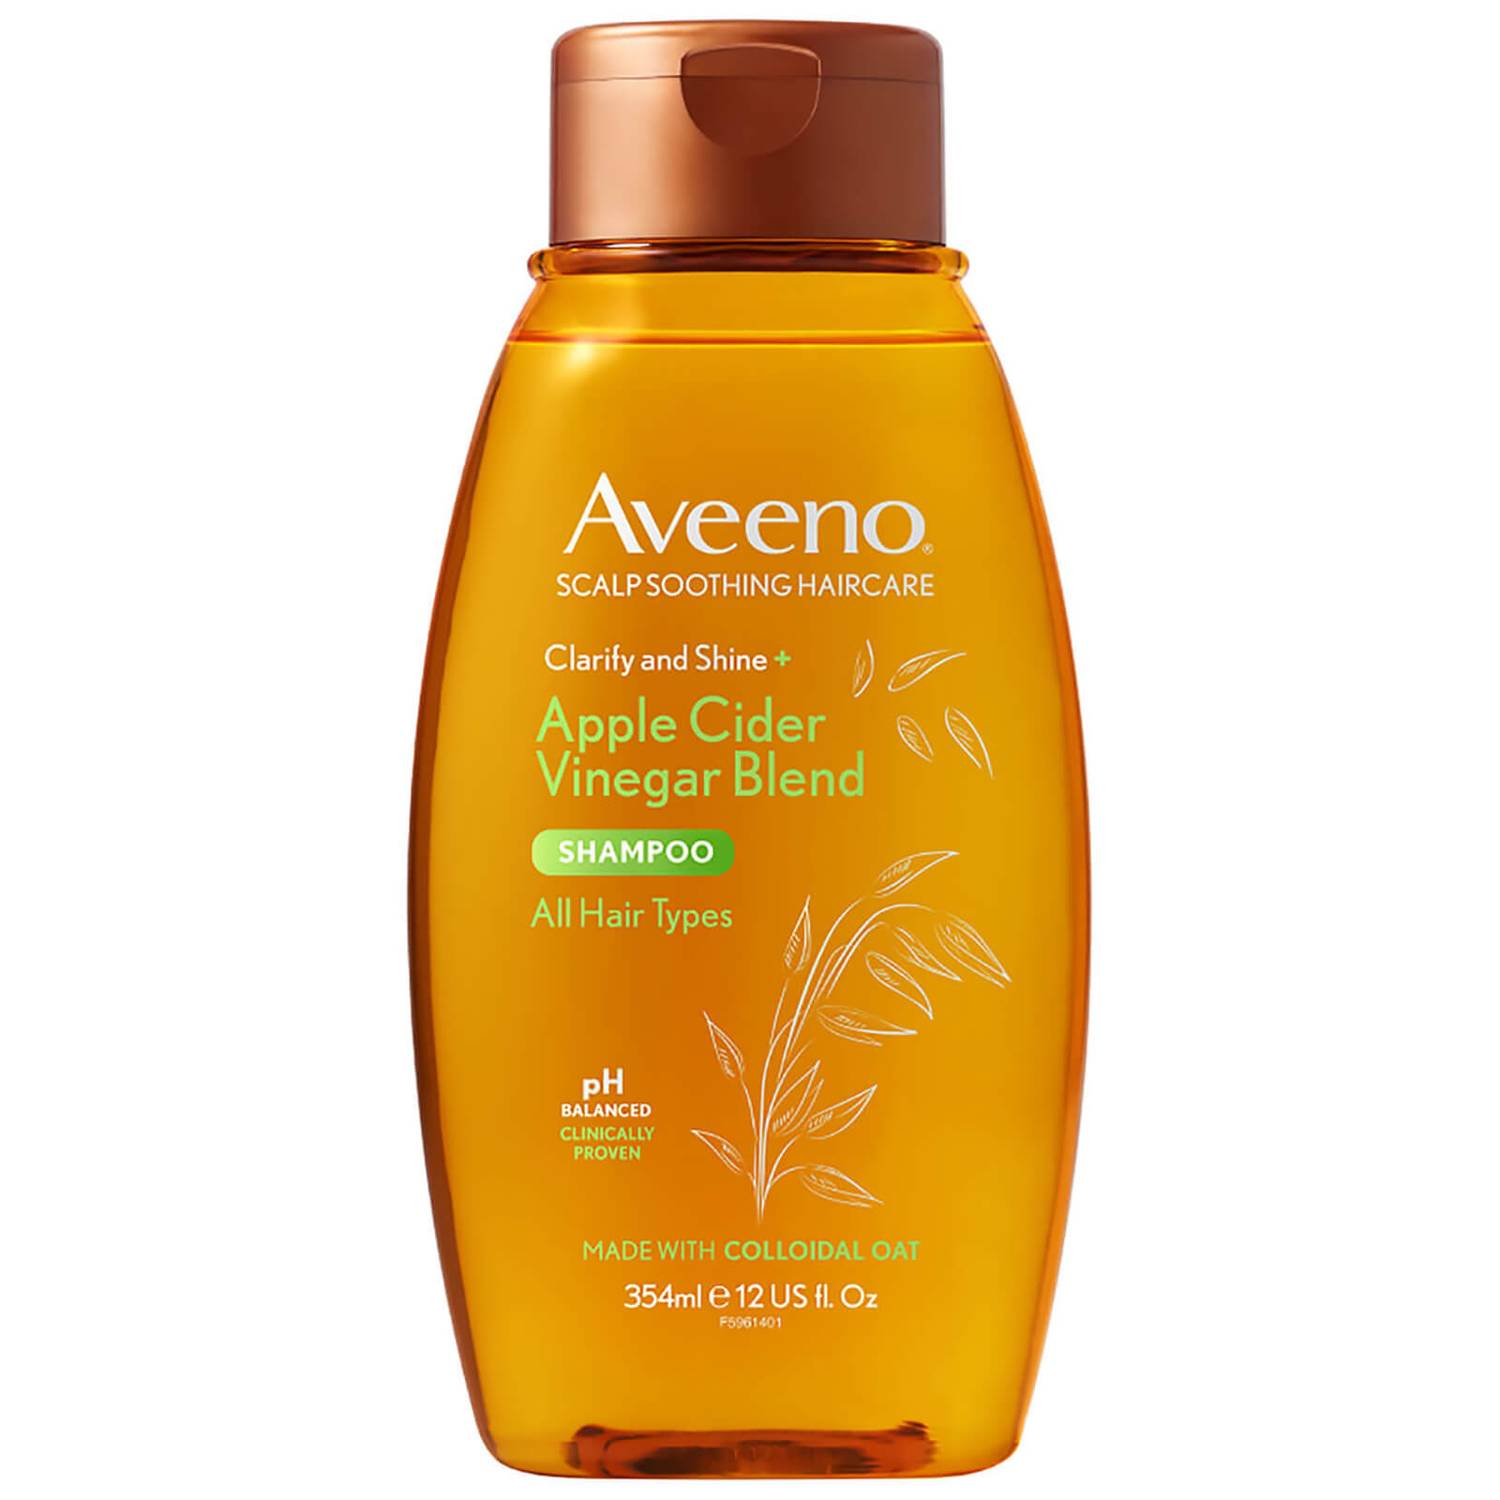 Aveeno Clarify and Shine+ Apple Cider Vinegar Blend Shampoo - 354ml